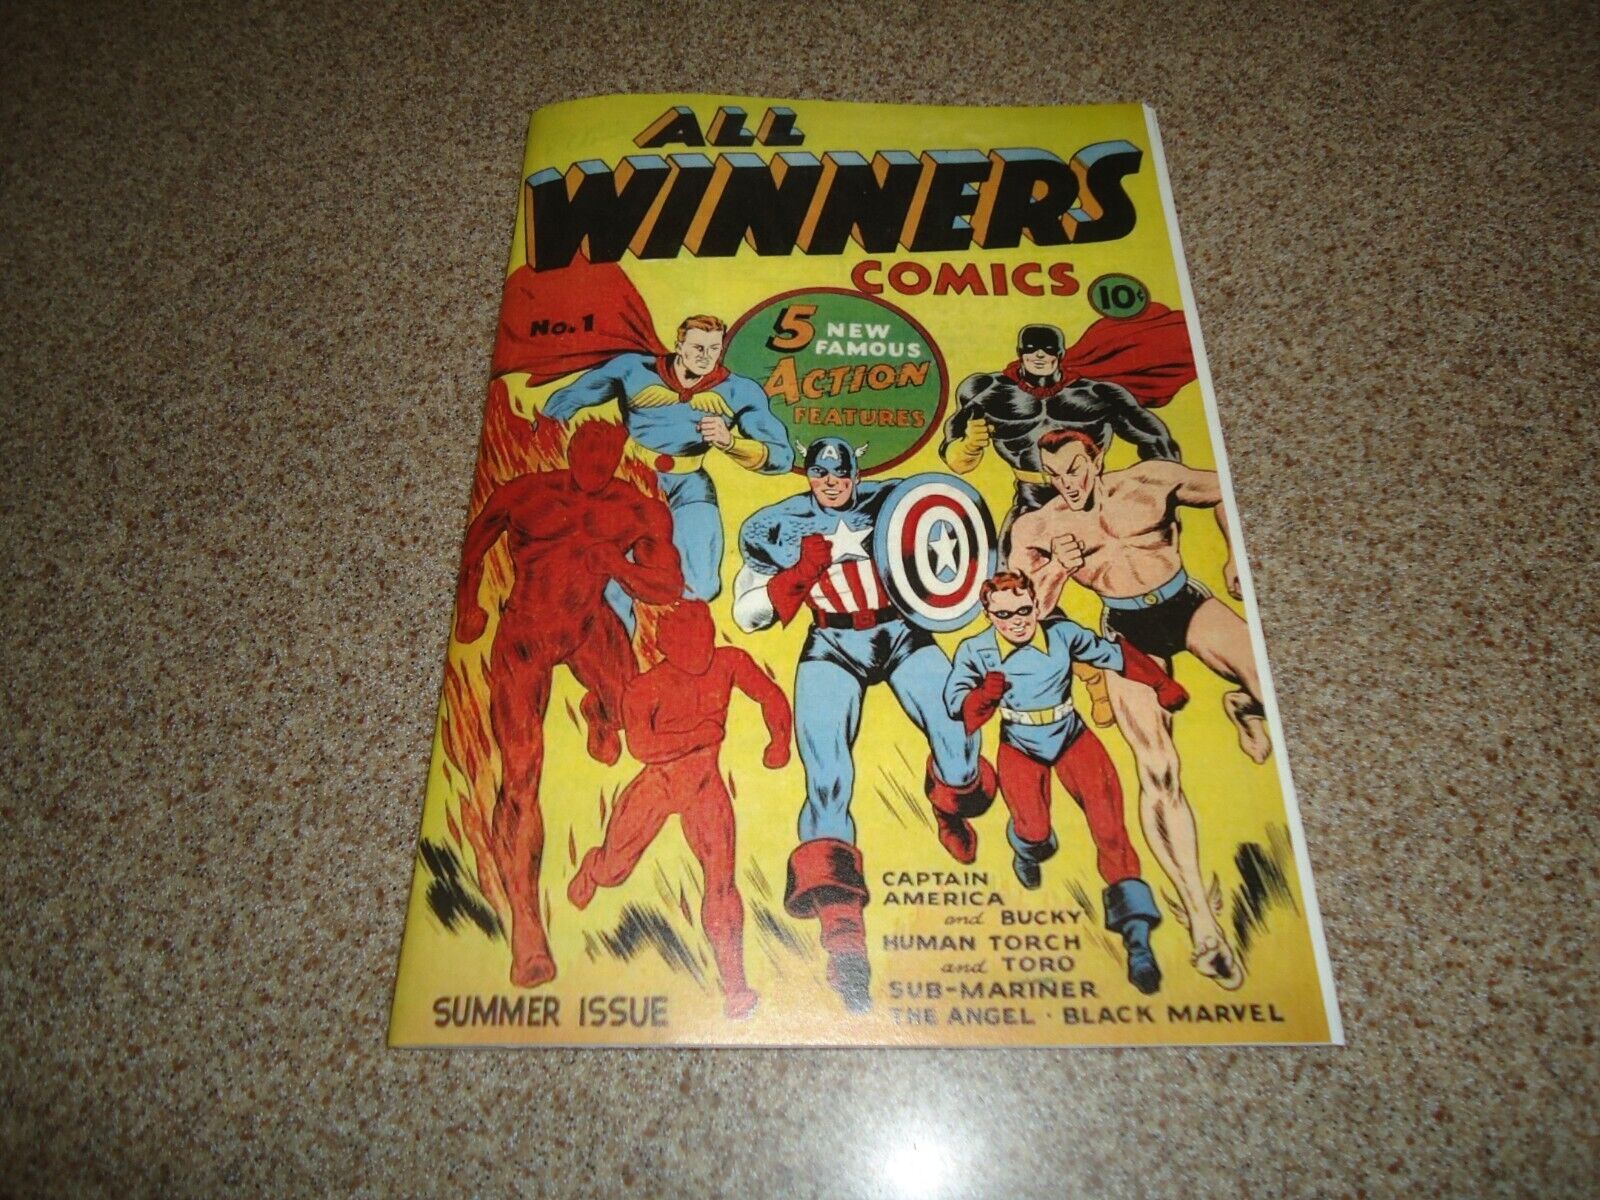 ALL WINNERS COMICS #1 ( 1941 ) PHOTOCOPY EDITION HIGH GRADE